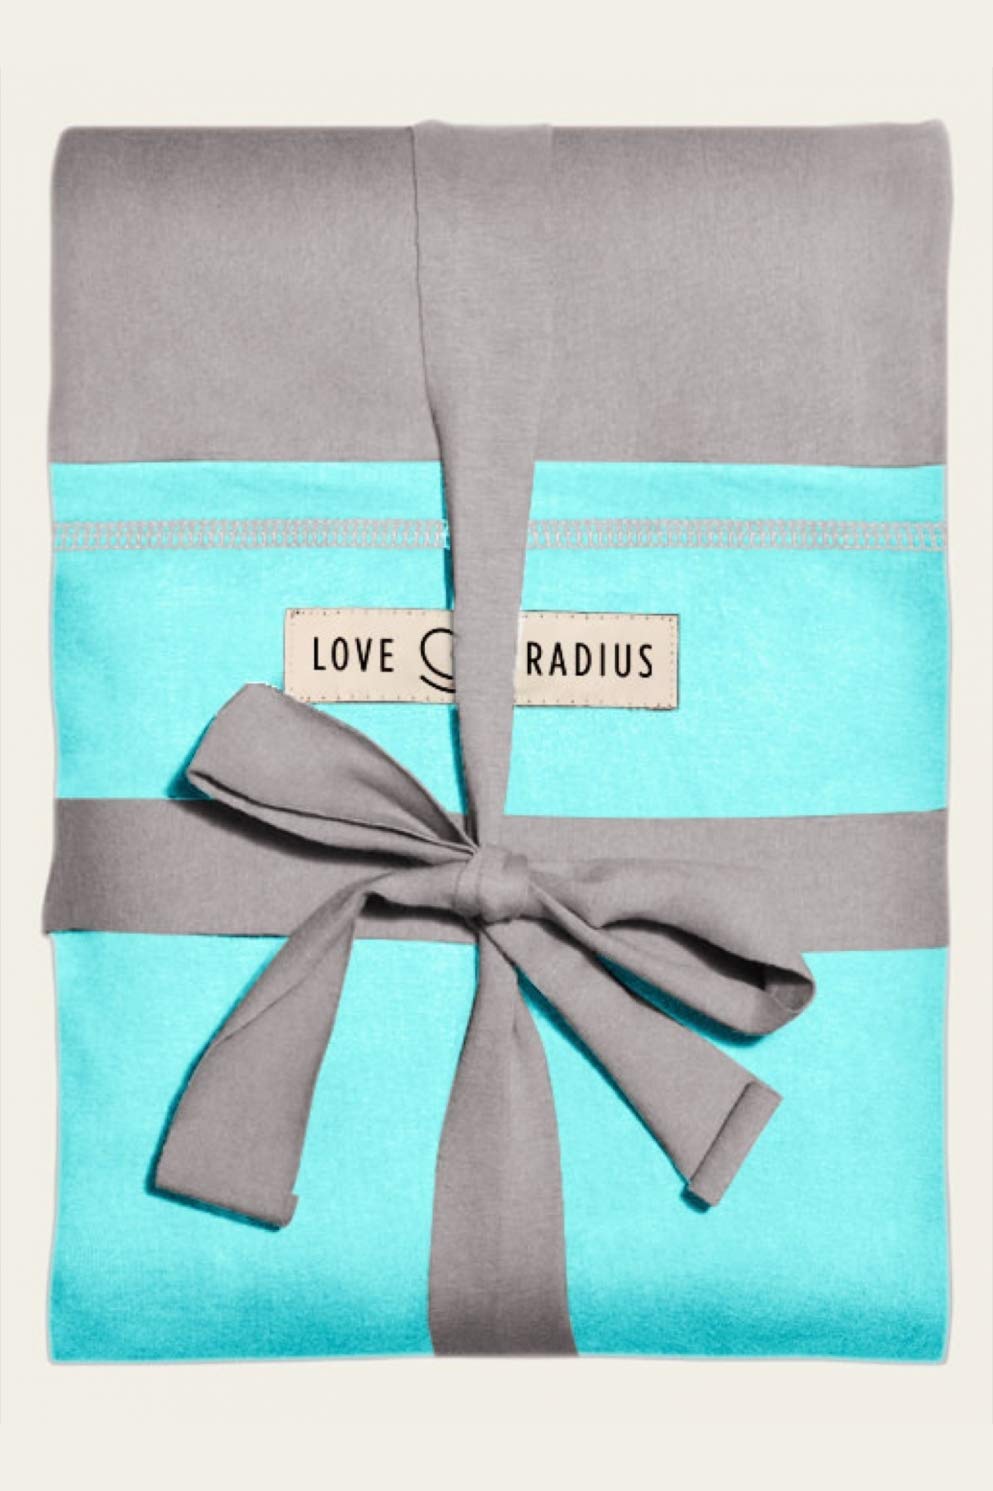 Love Radius L\'Originale JPMBB Baby Sling Light Grey Turquoise Bag